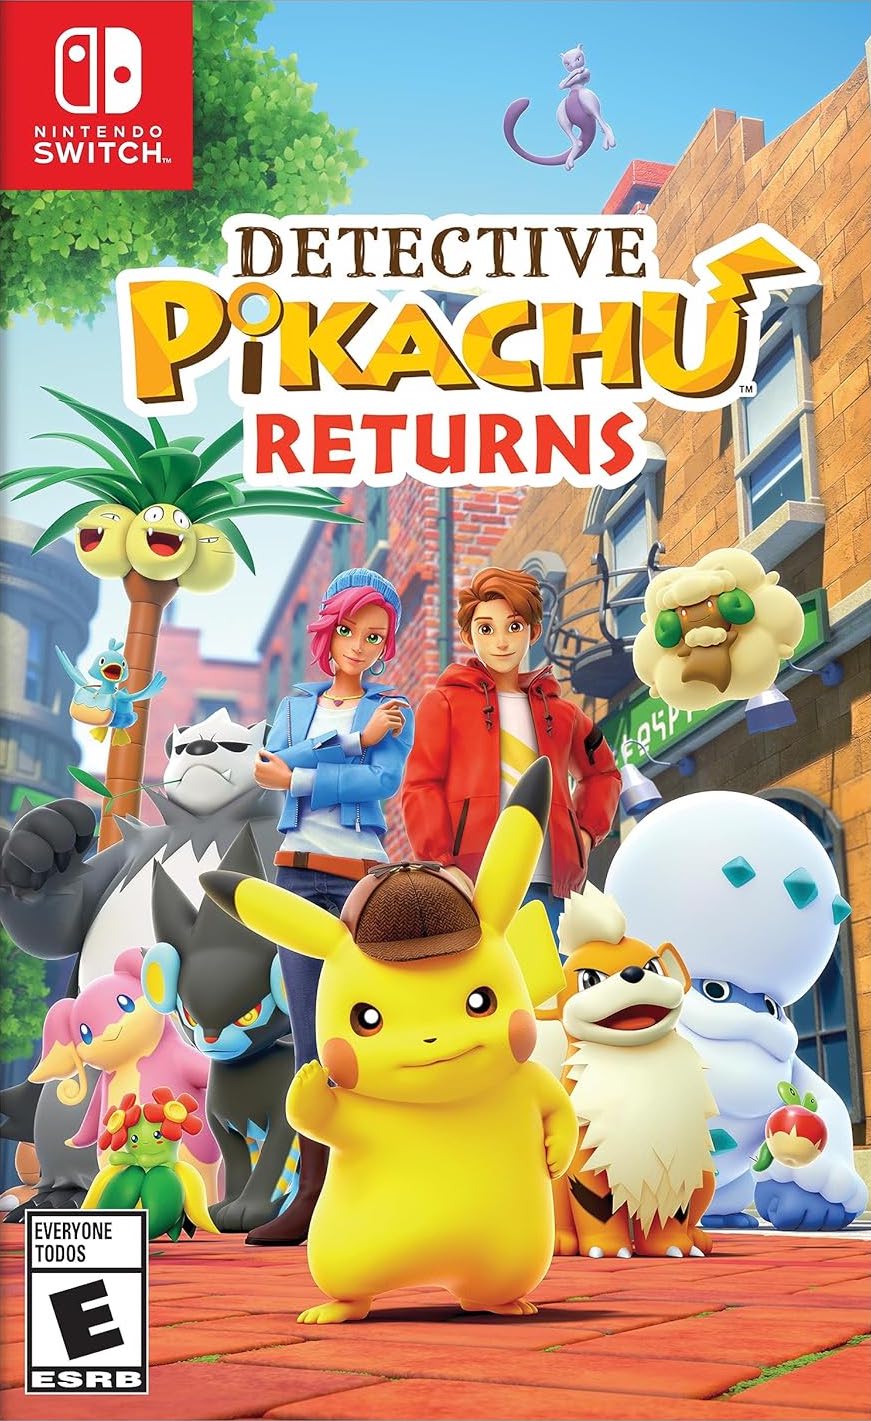 Detective Pikachu Returns - Nintendo Switch